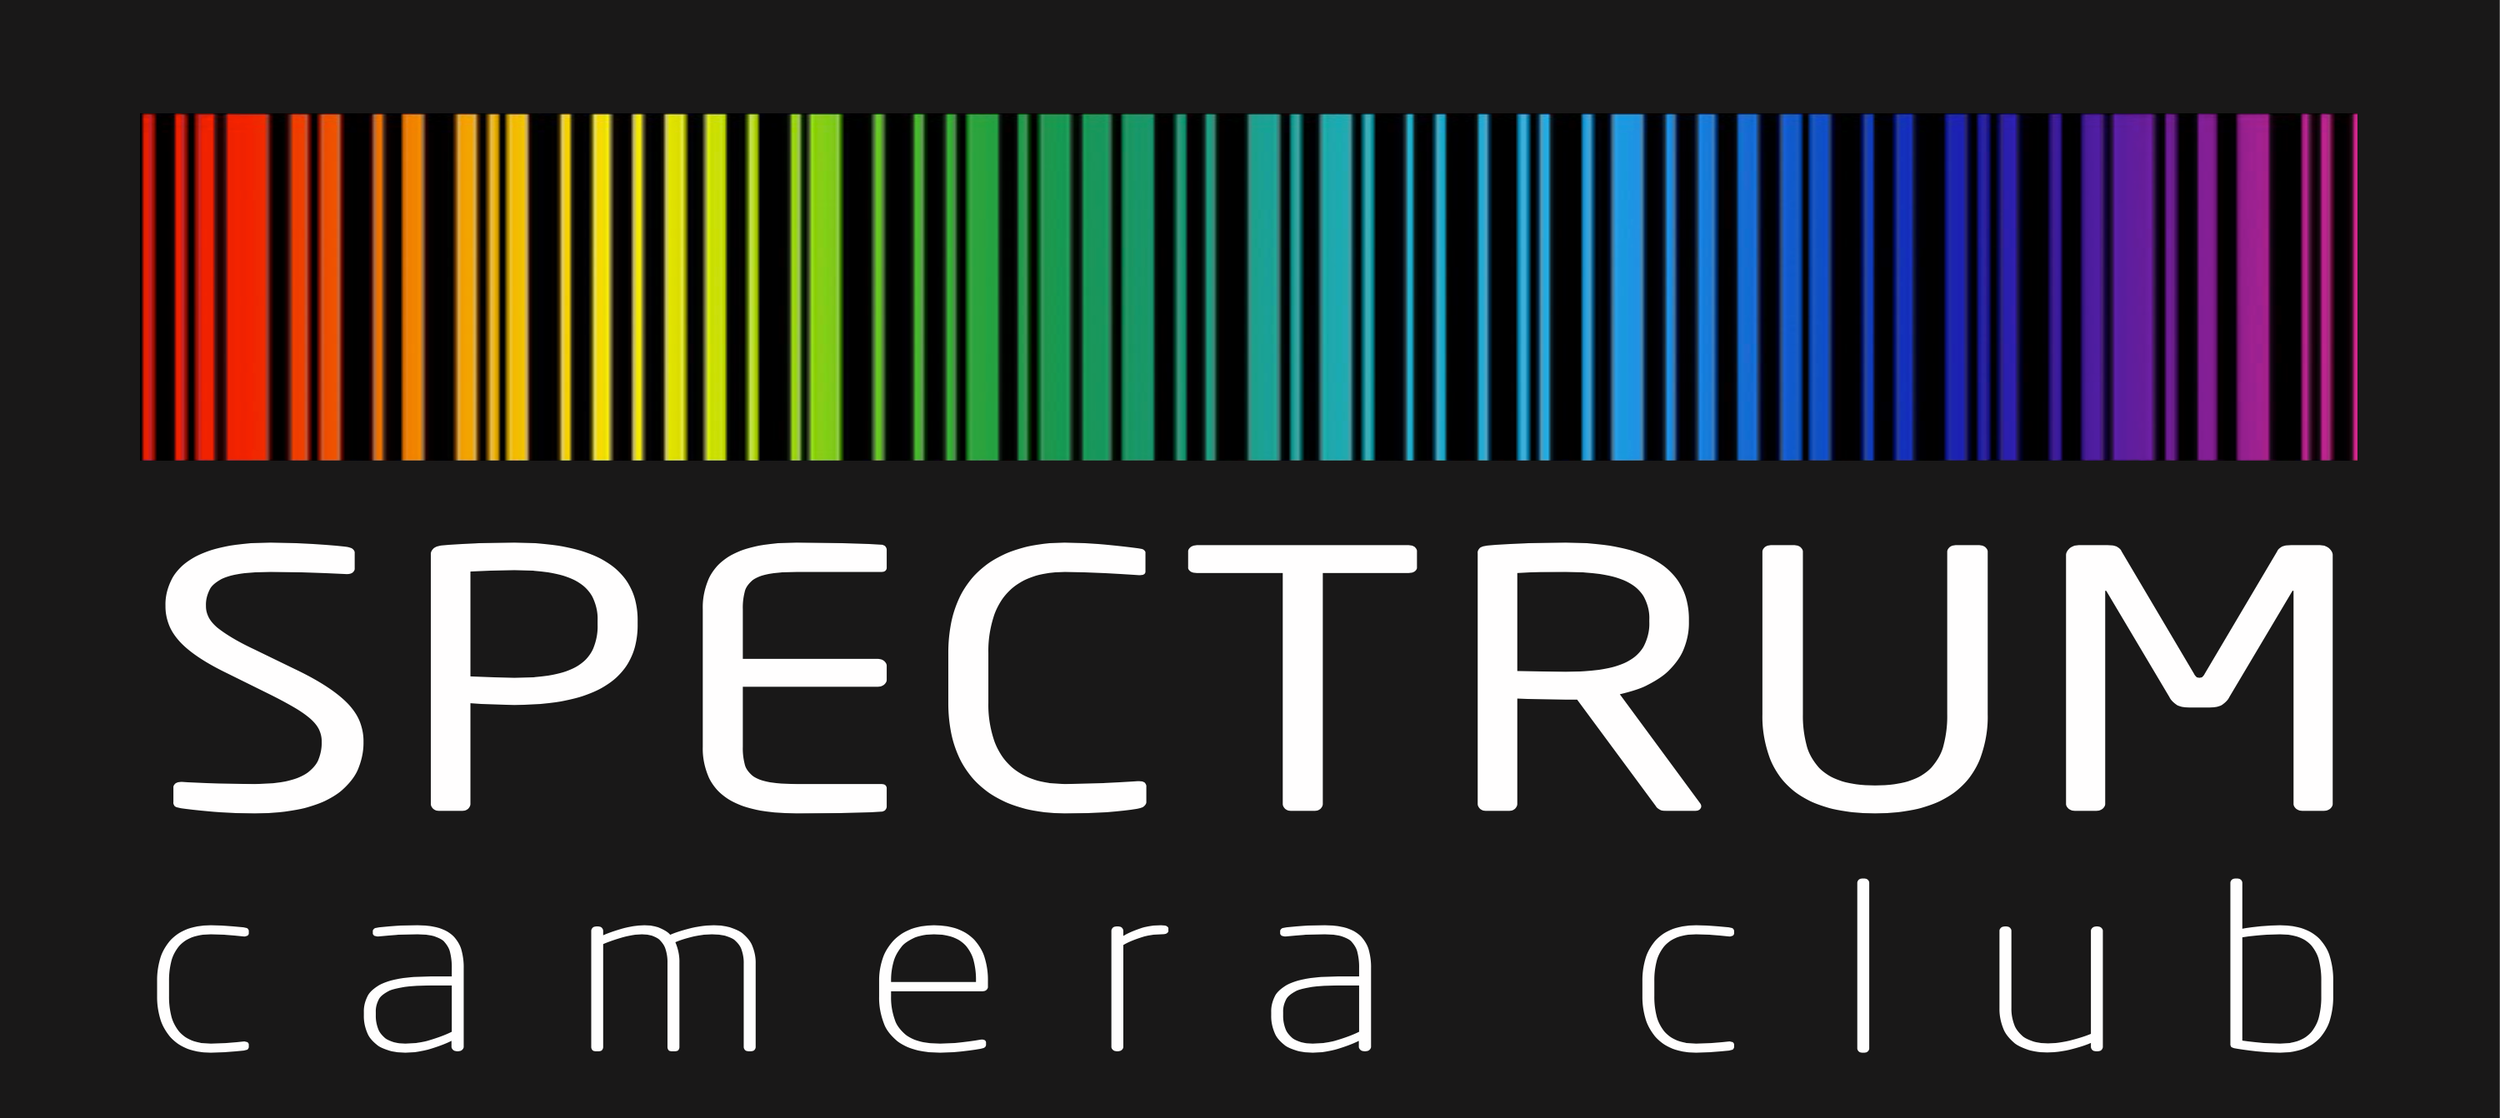 spectrum camera club header.png